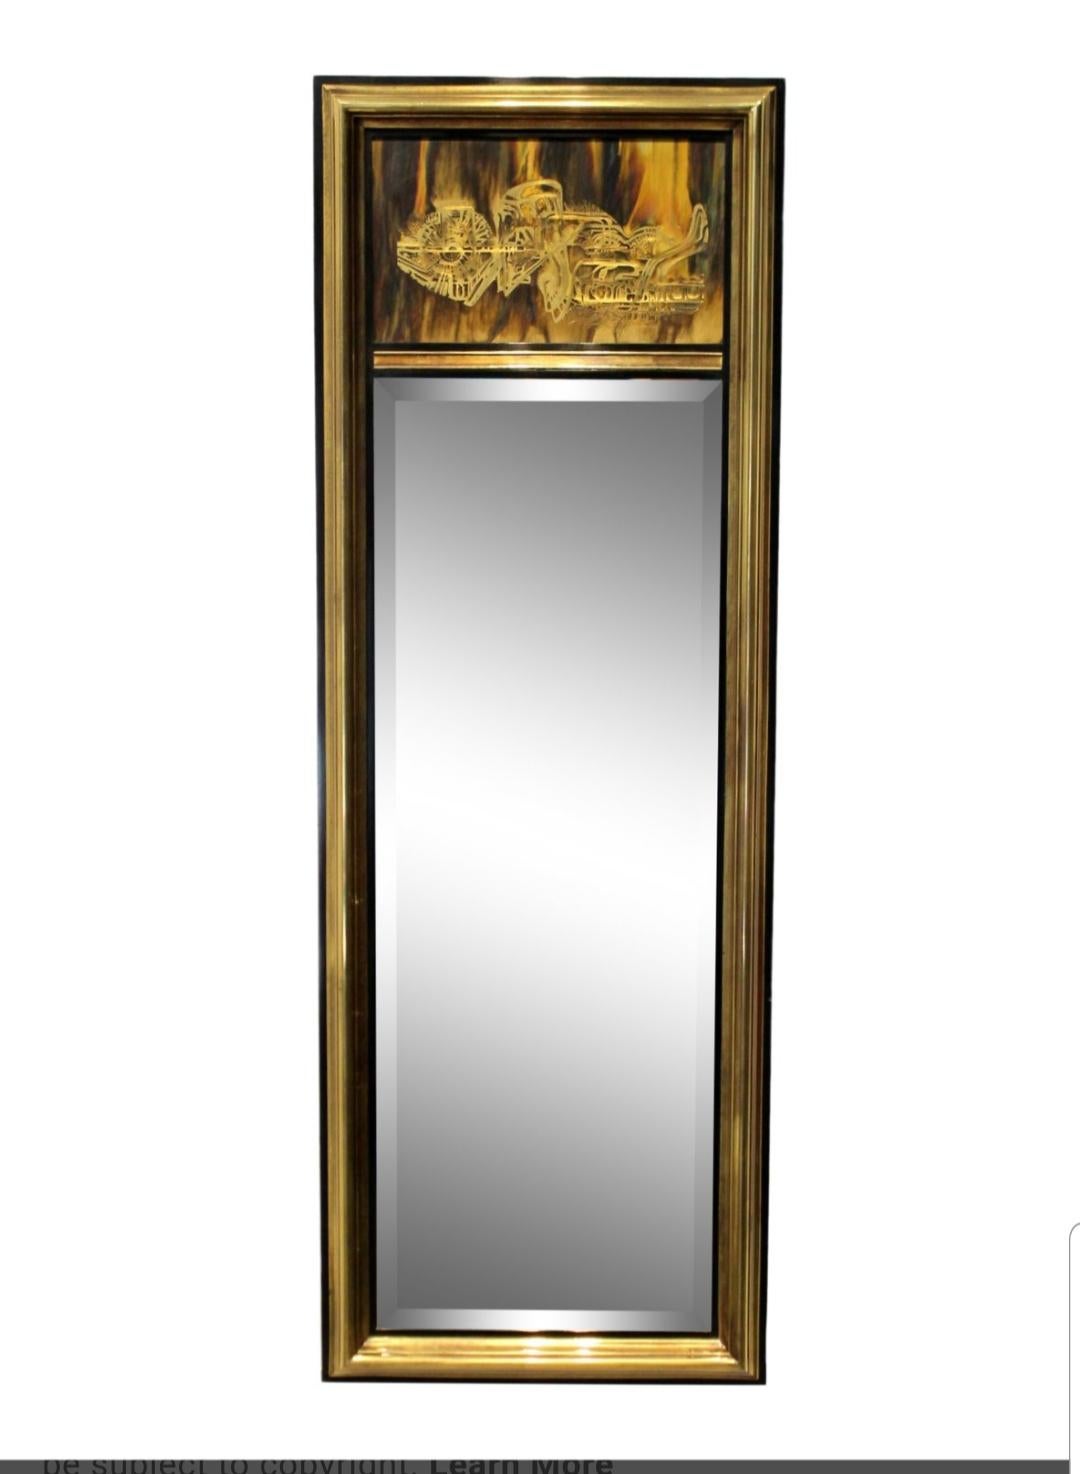 Beautiful brass mirror by Mastercraft. Upper panel designed and created by Bernhard Rohne.
American circa 1970.